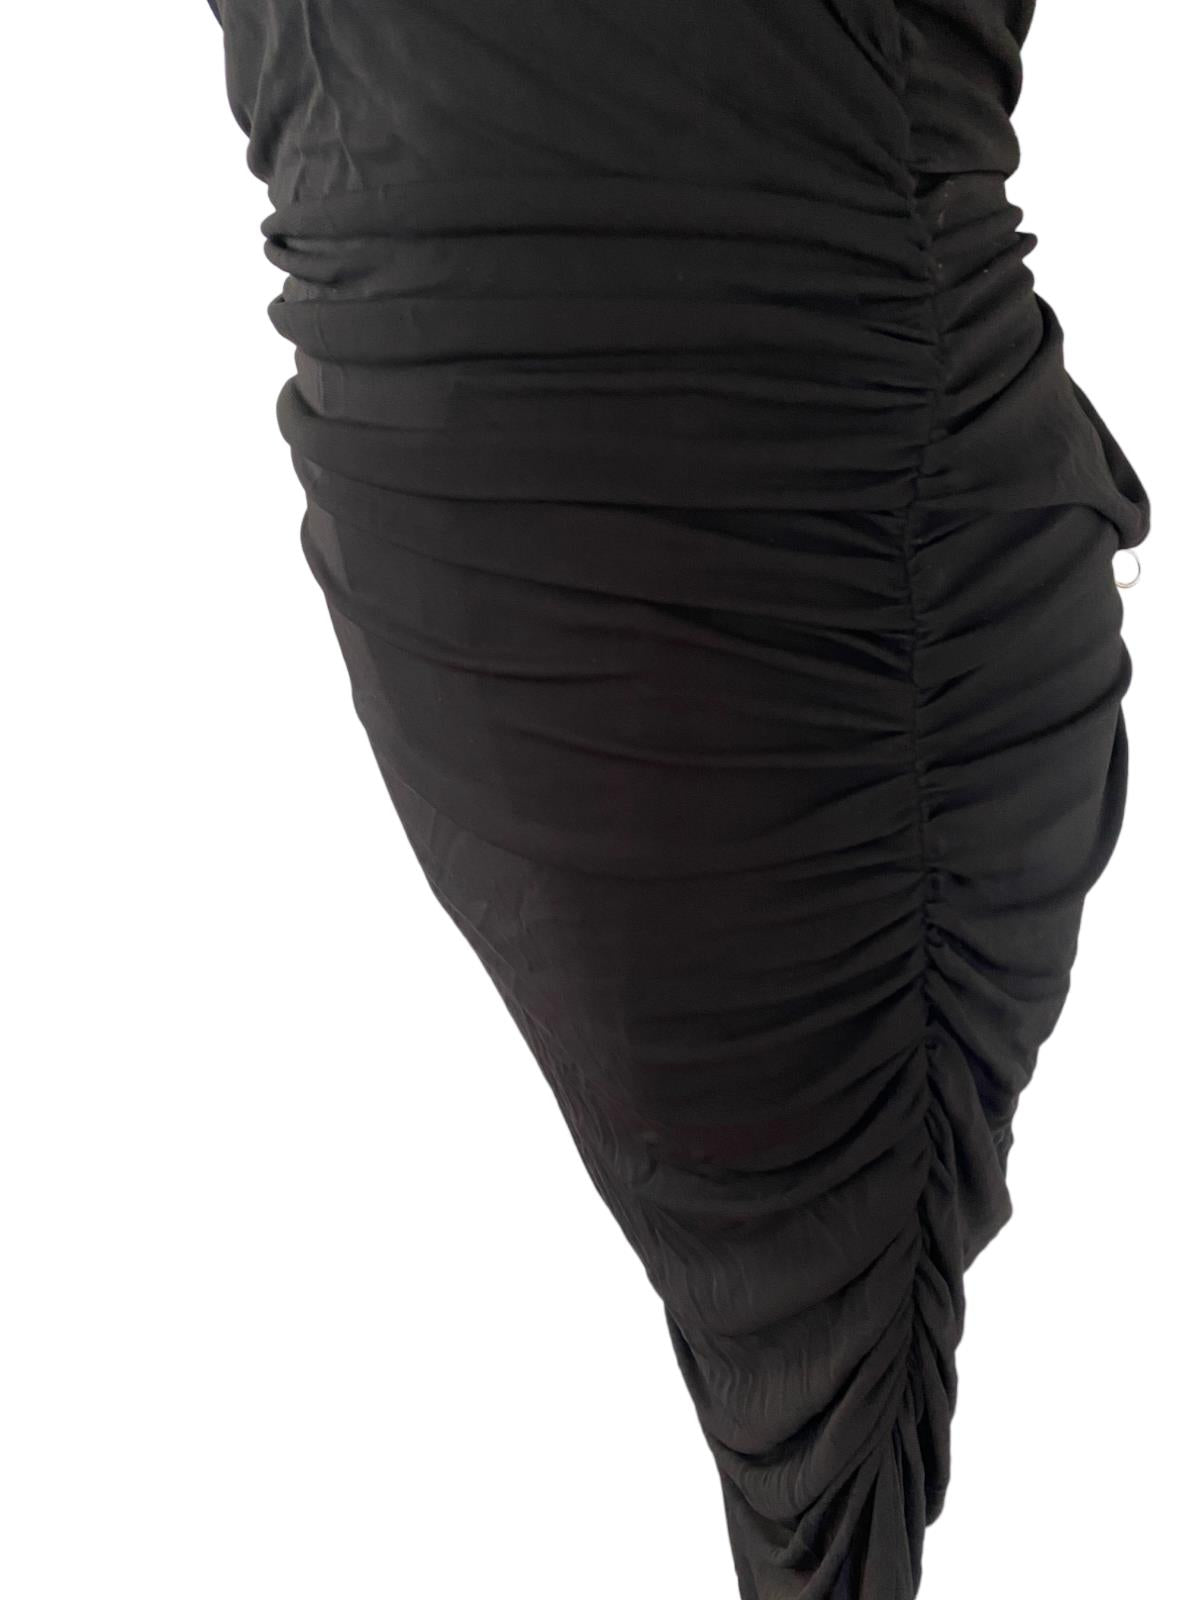 CUE Slinky Maxi Black Dress | Size 14, Gathered, Side Slits, Stretch, Formal